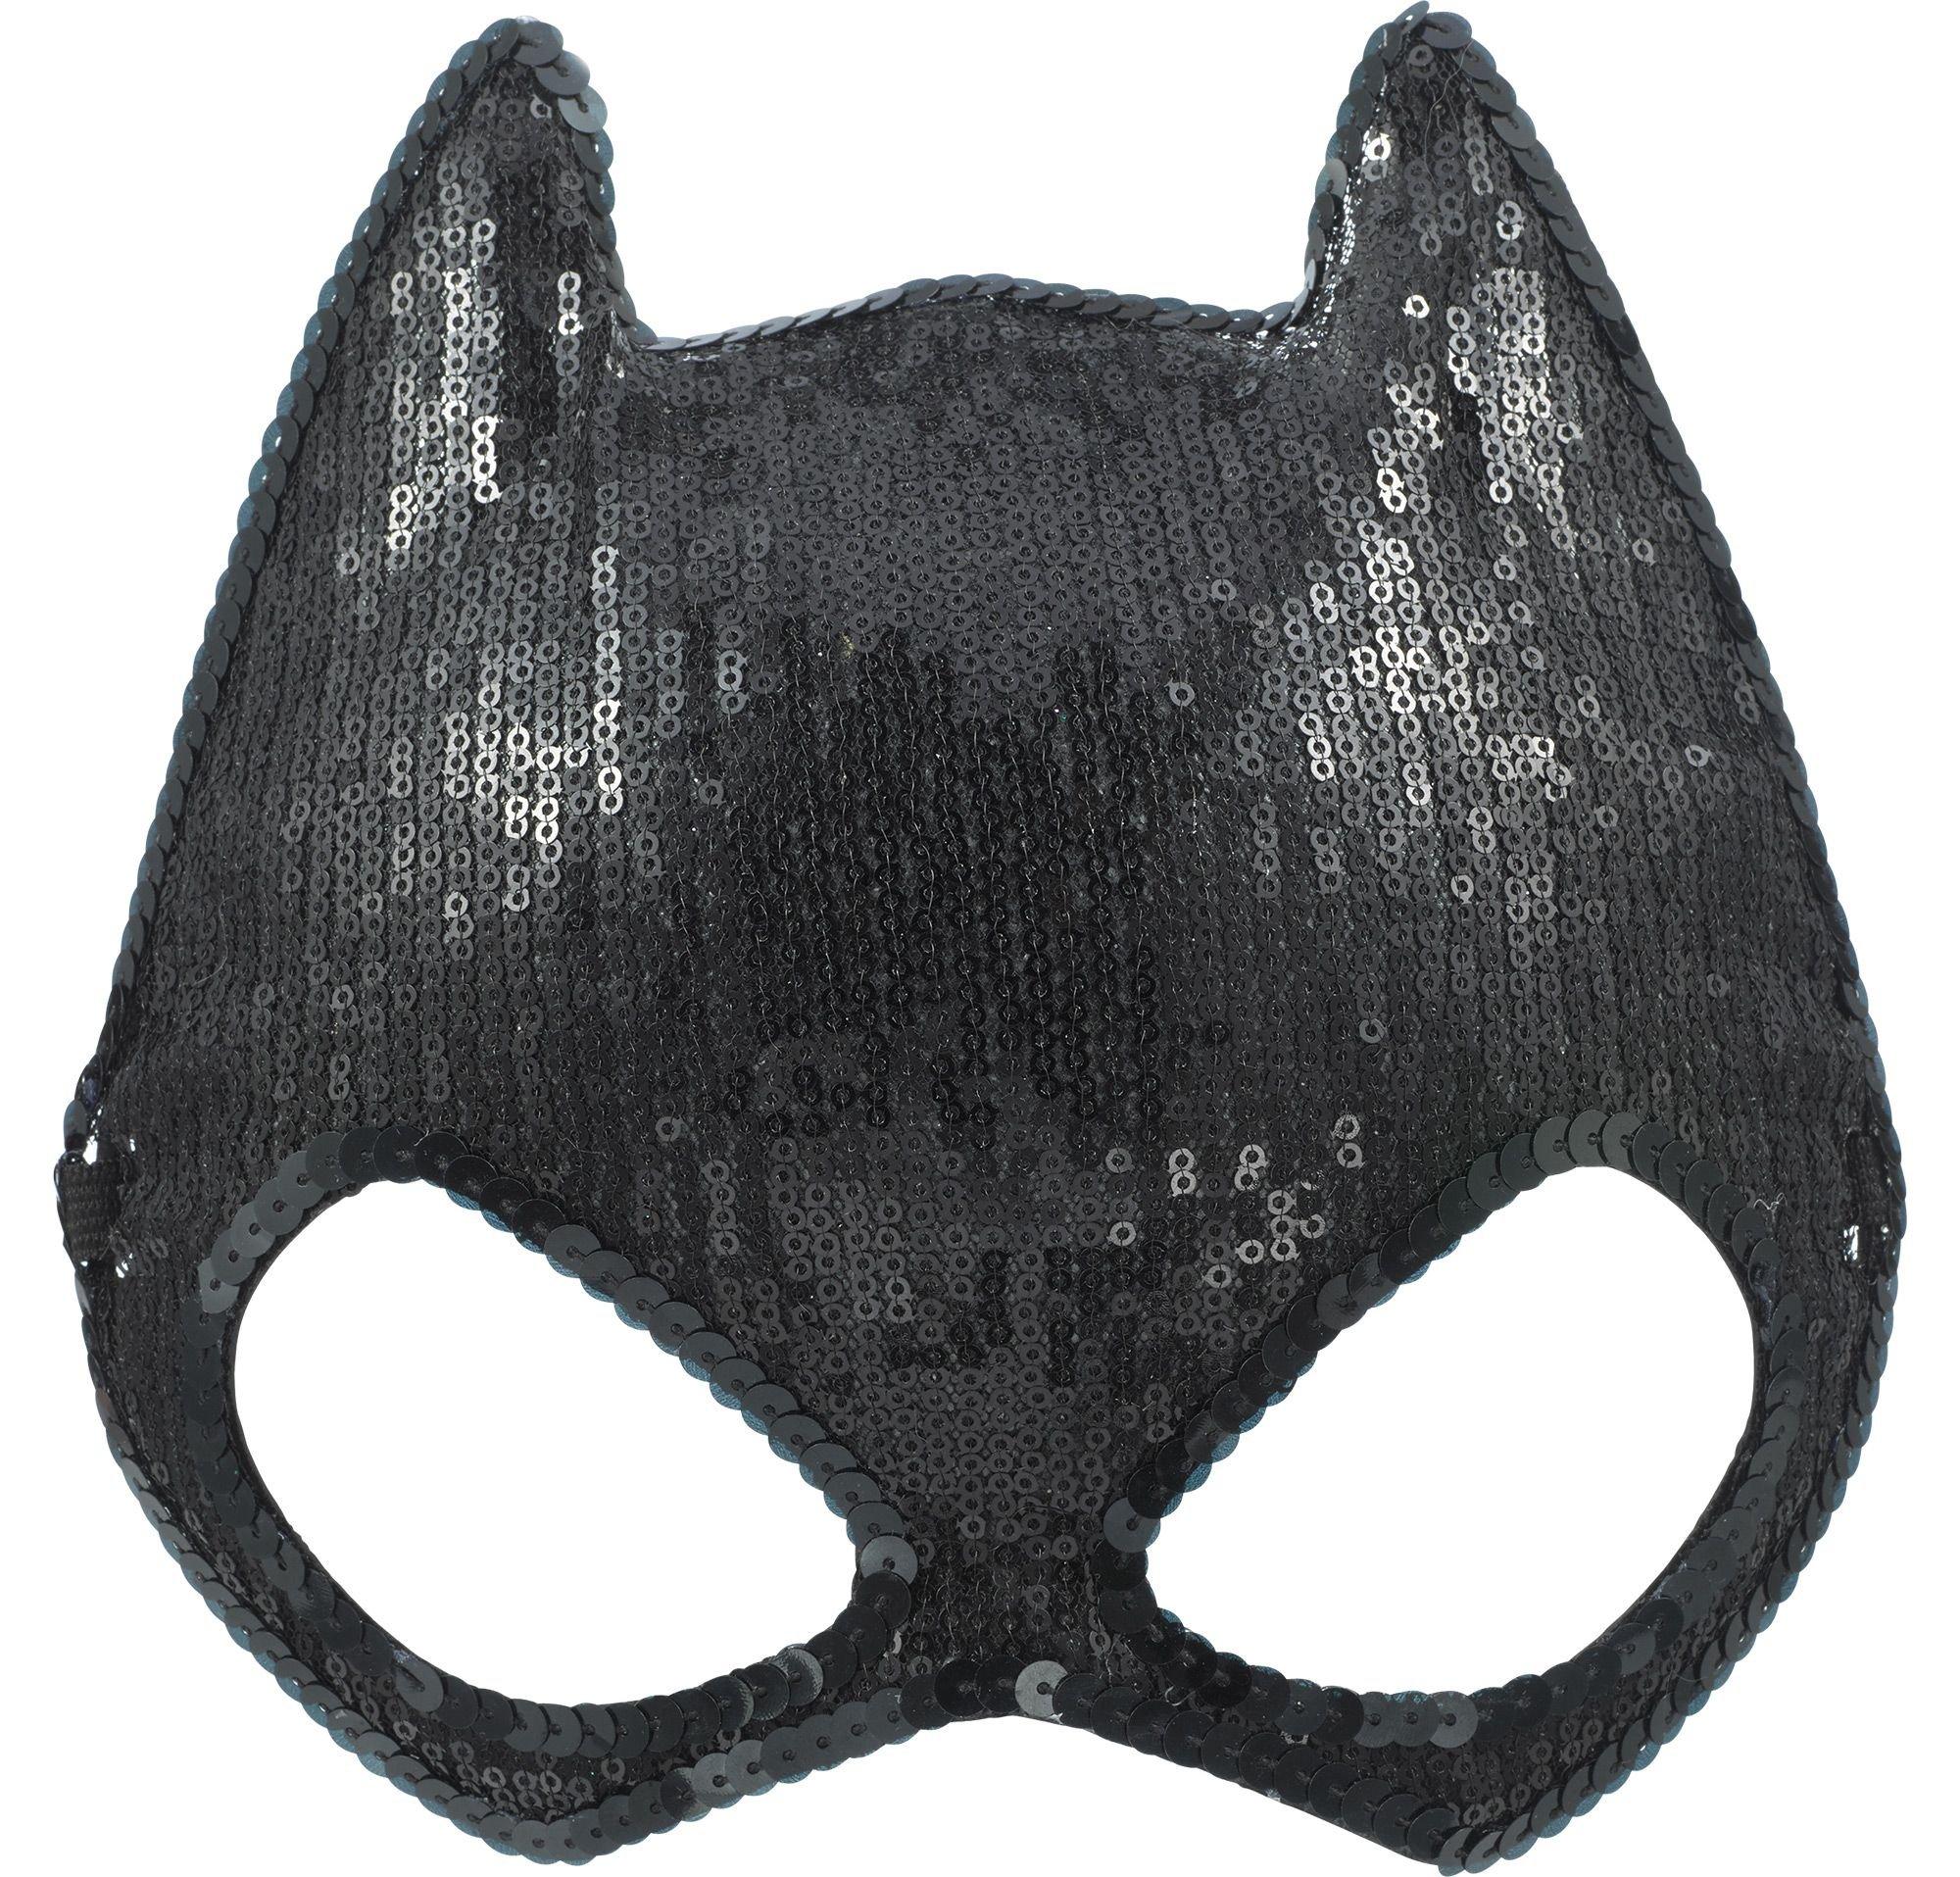 batgirl mask